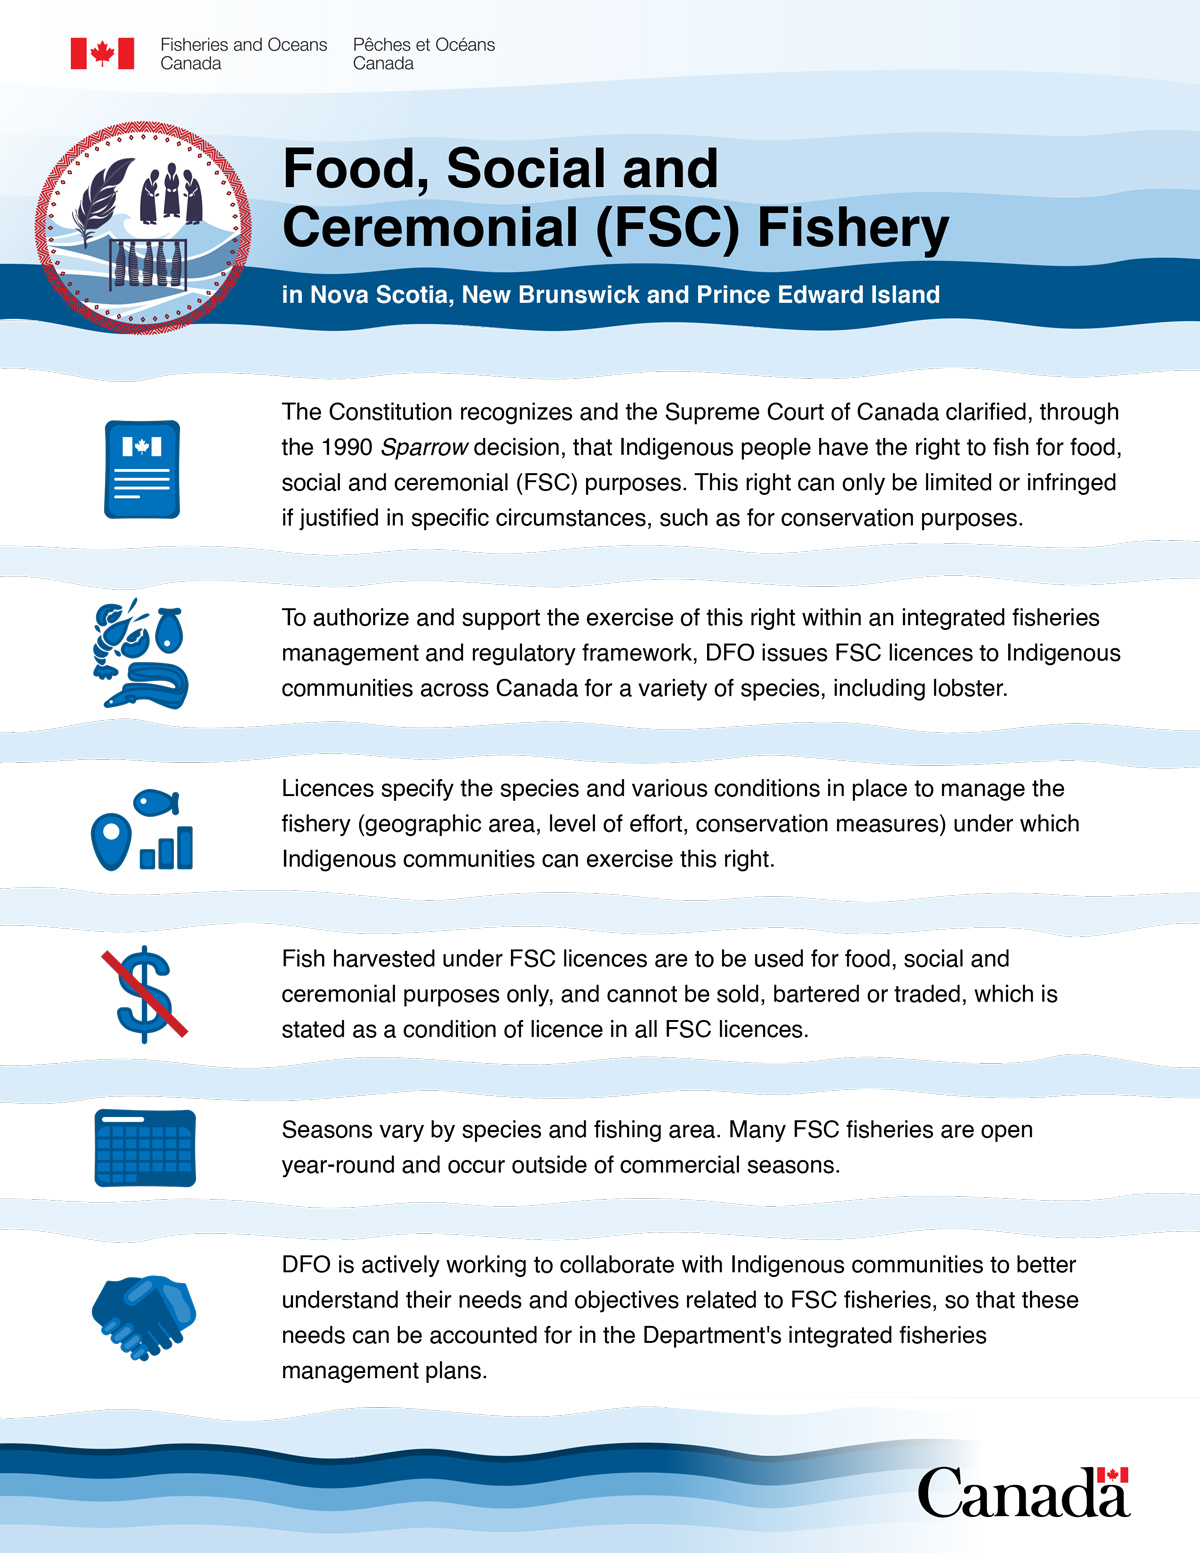 Food, Social and Ceremonial (FSC) Fishery in Nova Scotia, New